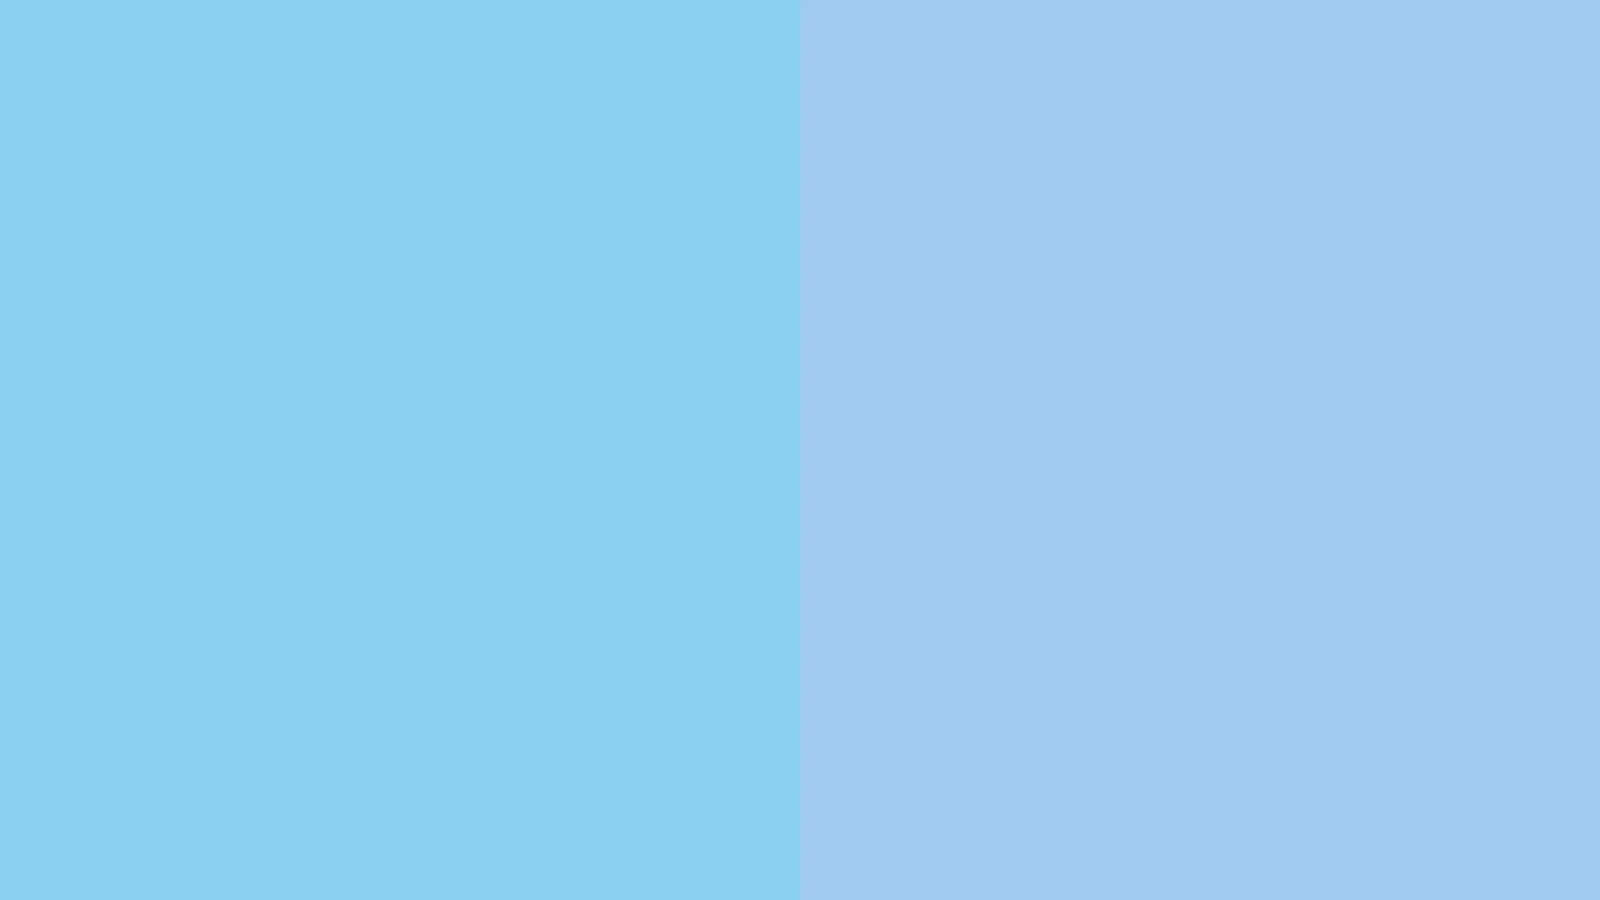 100+] Solid Light Blue Backgrounds